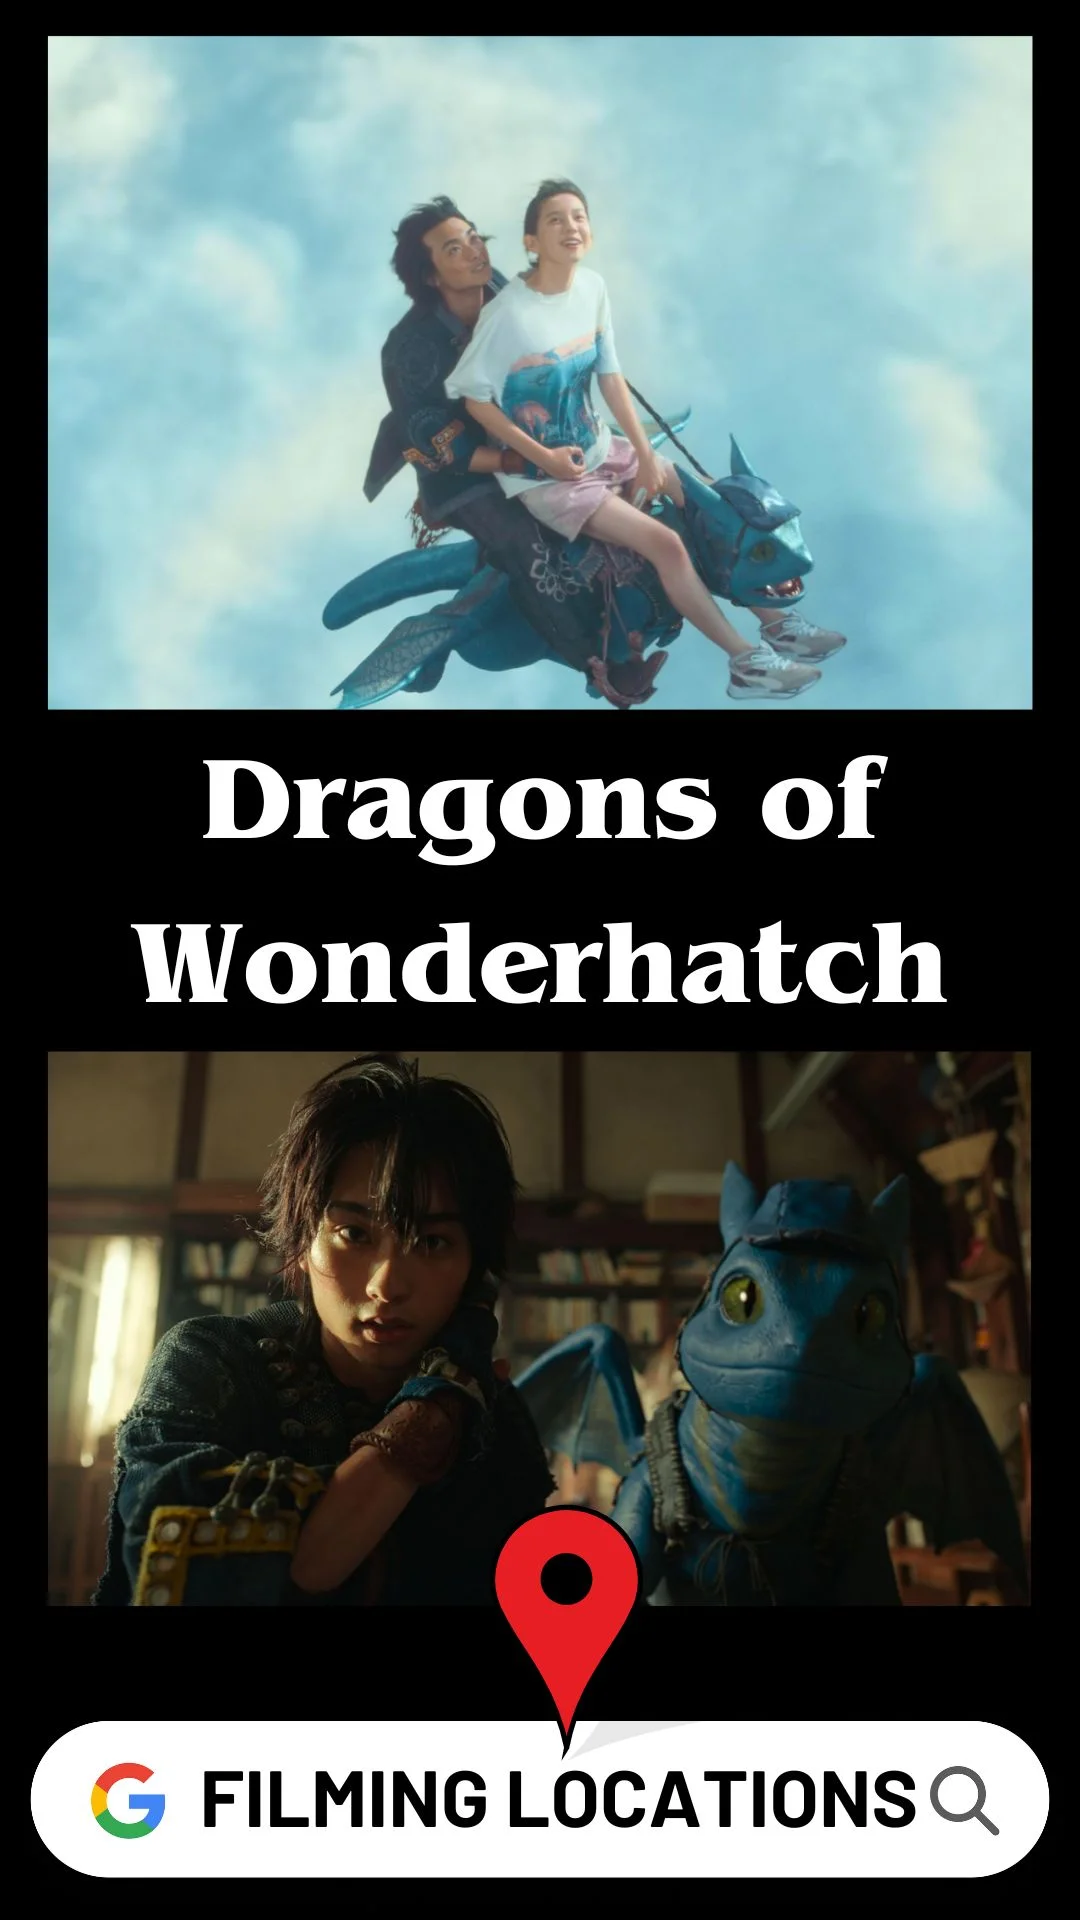 Dragons of Wonderhatch Filming Locations